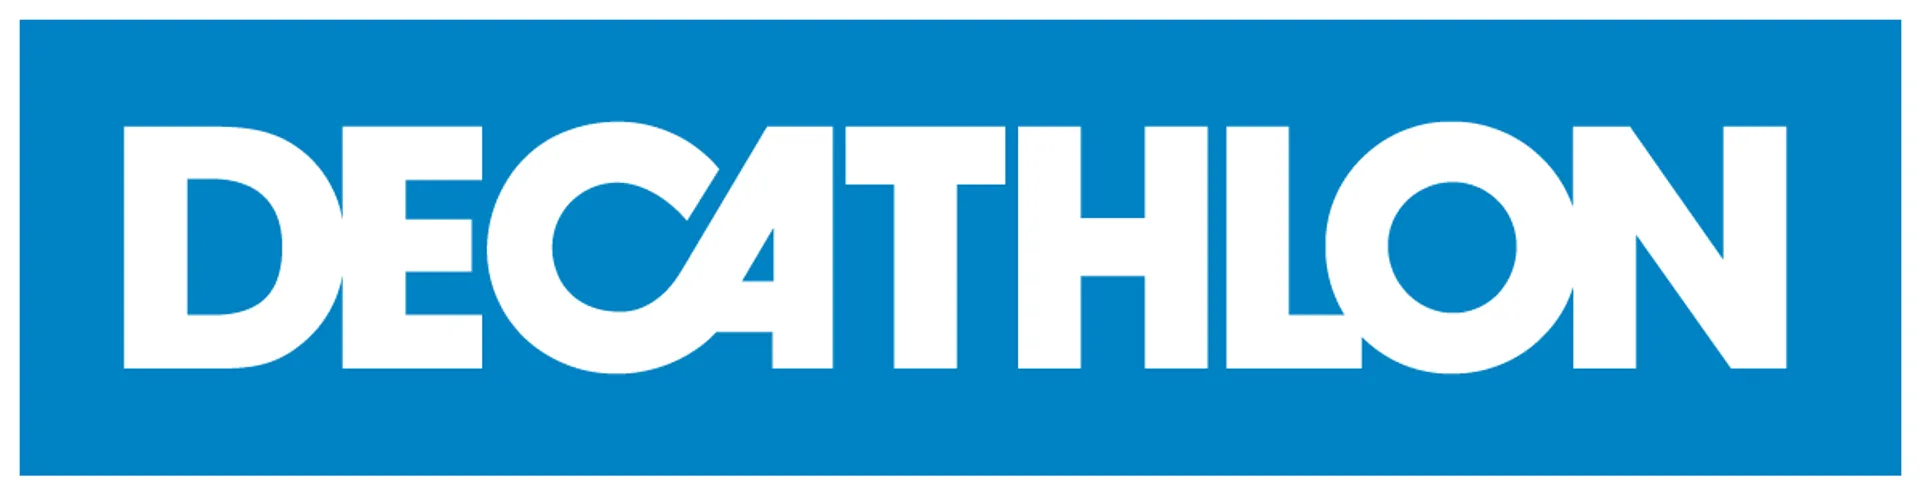 DECATHLON logo of current catalogue